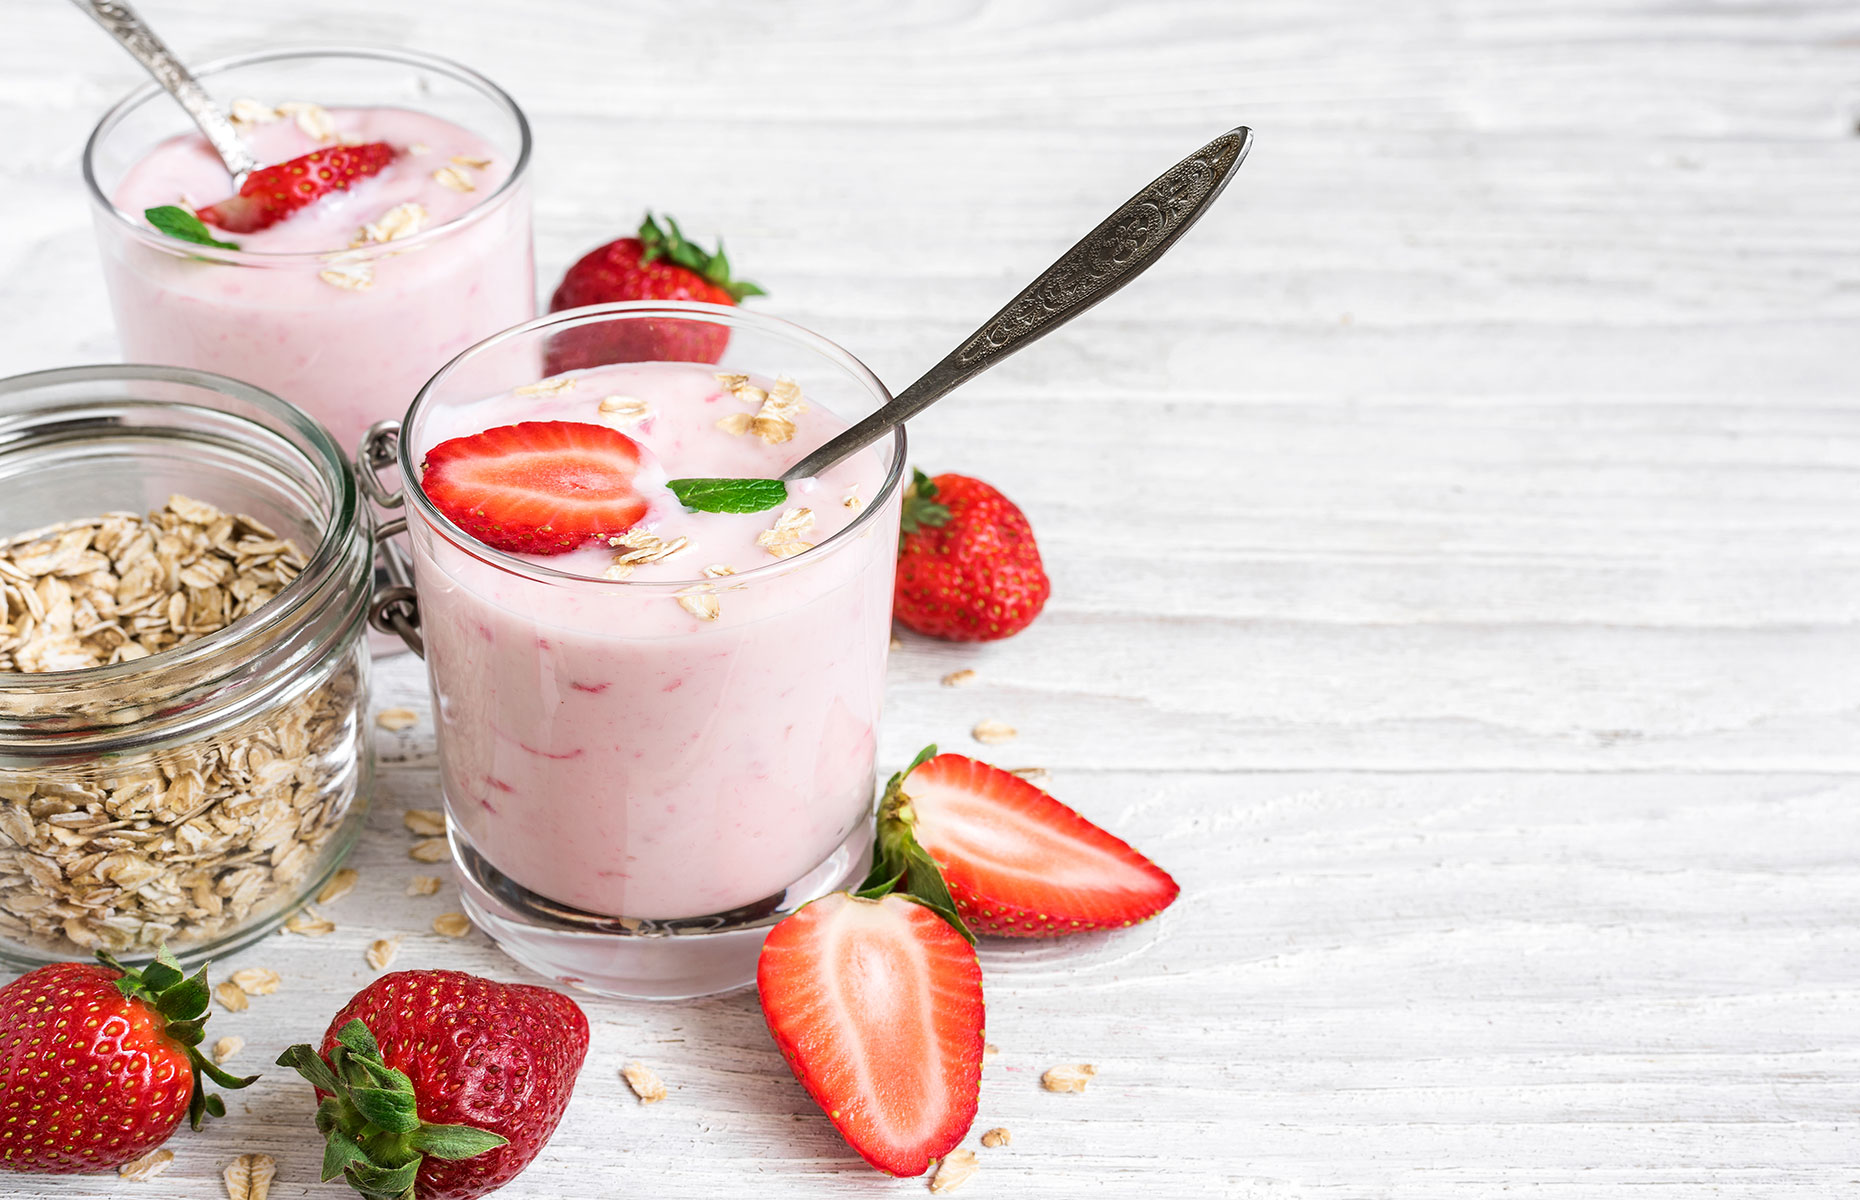 Strawberry yogurt (Image: artem evdokimov/Shutterstock)